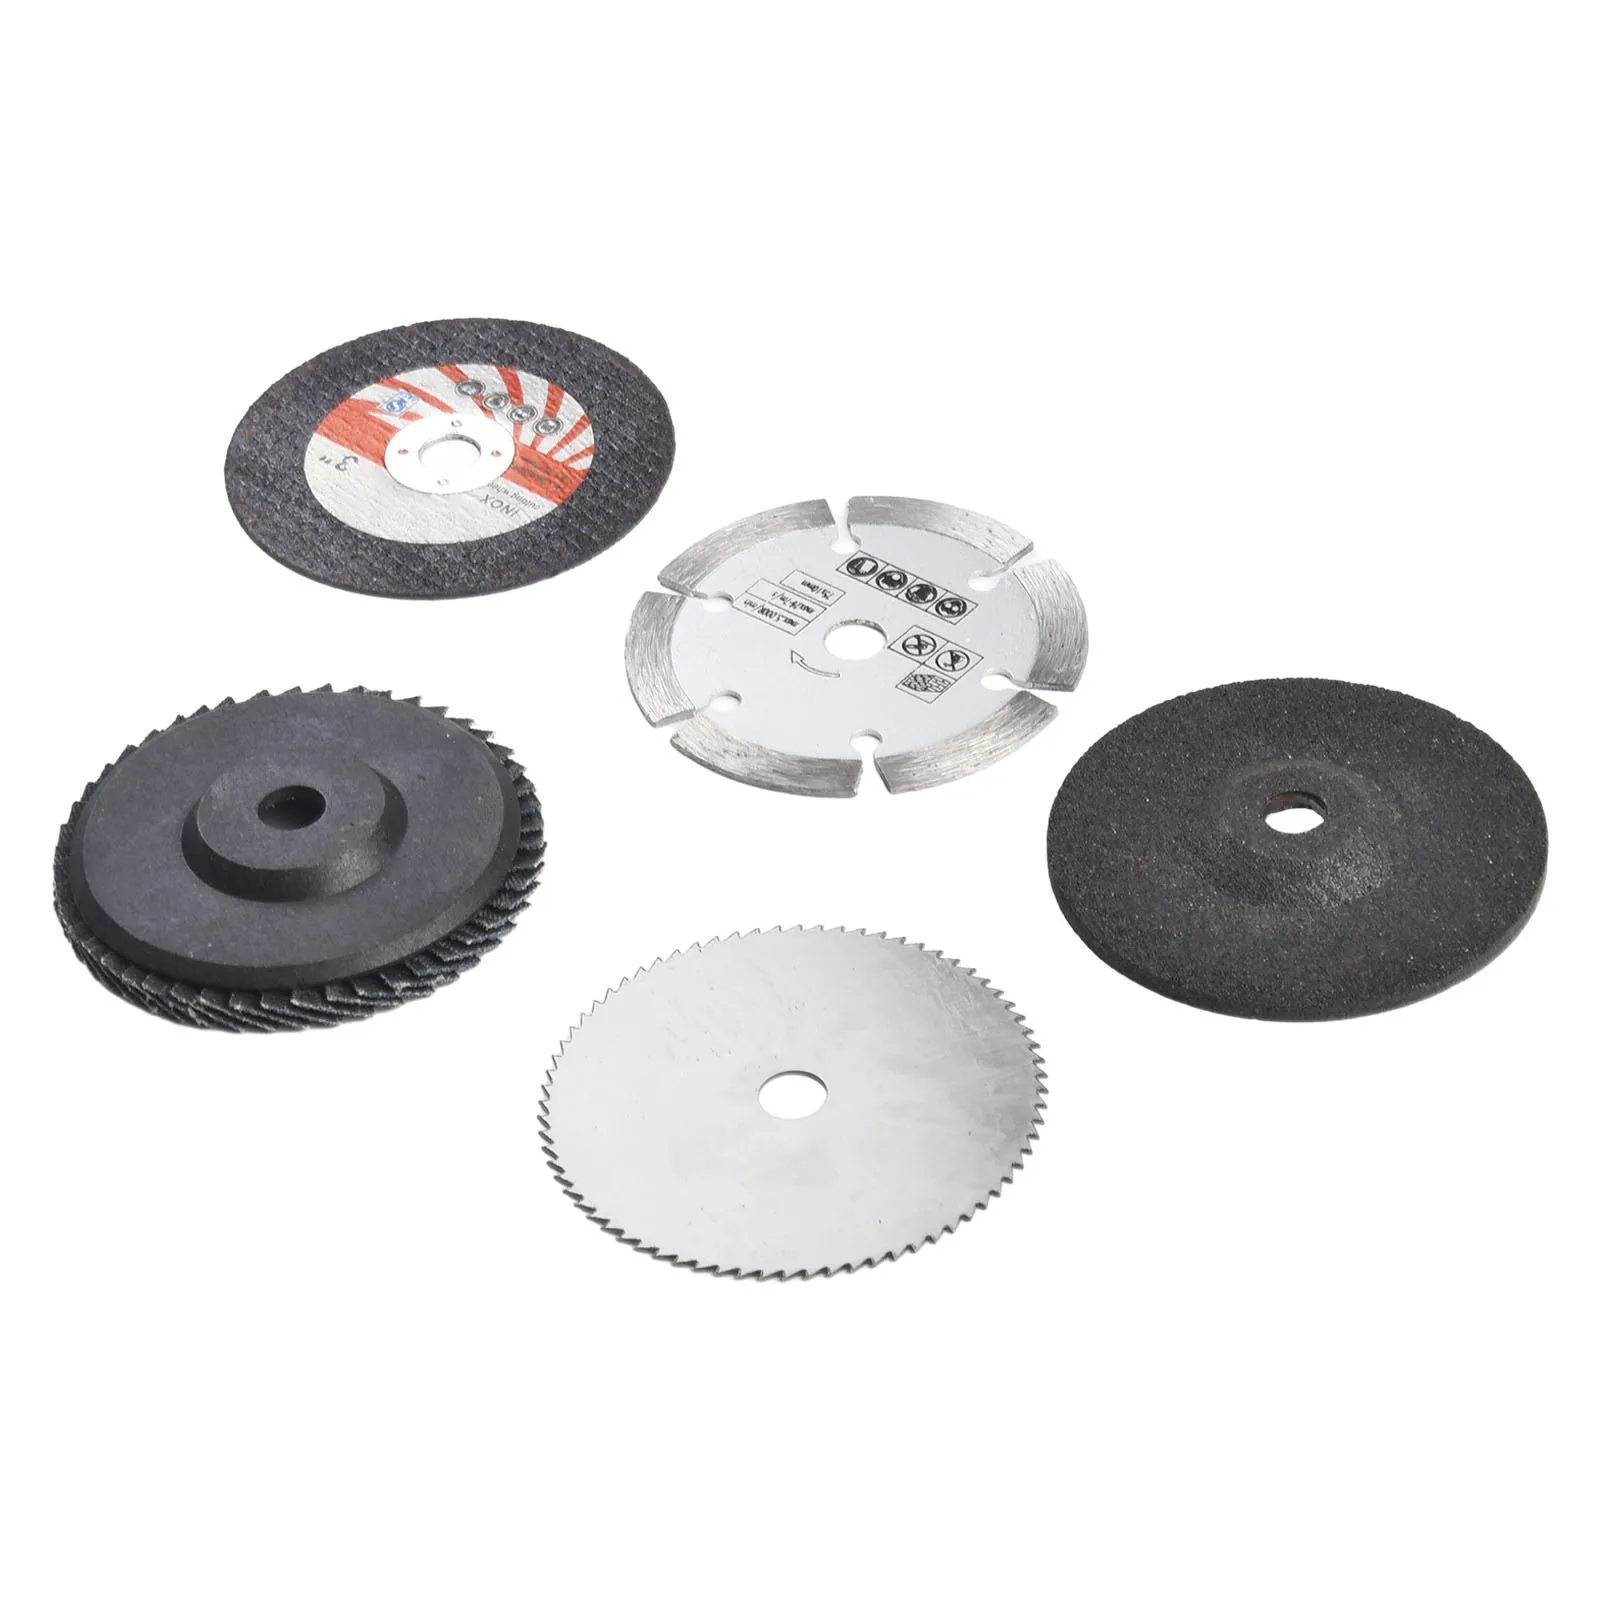 

5pcs 75mm Angle Grinder Grinding Wheel Circular Resin Cutting Disc Circular HSS Saw Blade Flat Flap Discs Polishing Ceramic Tile